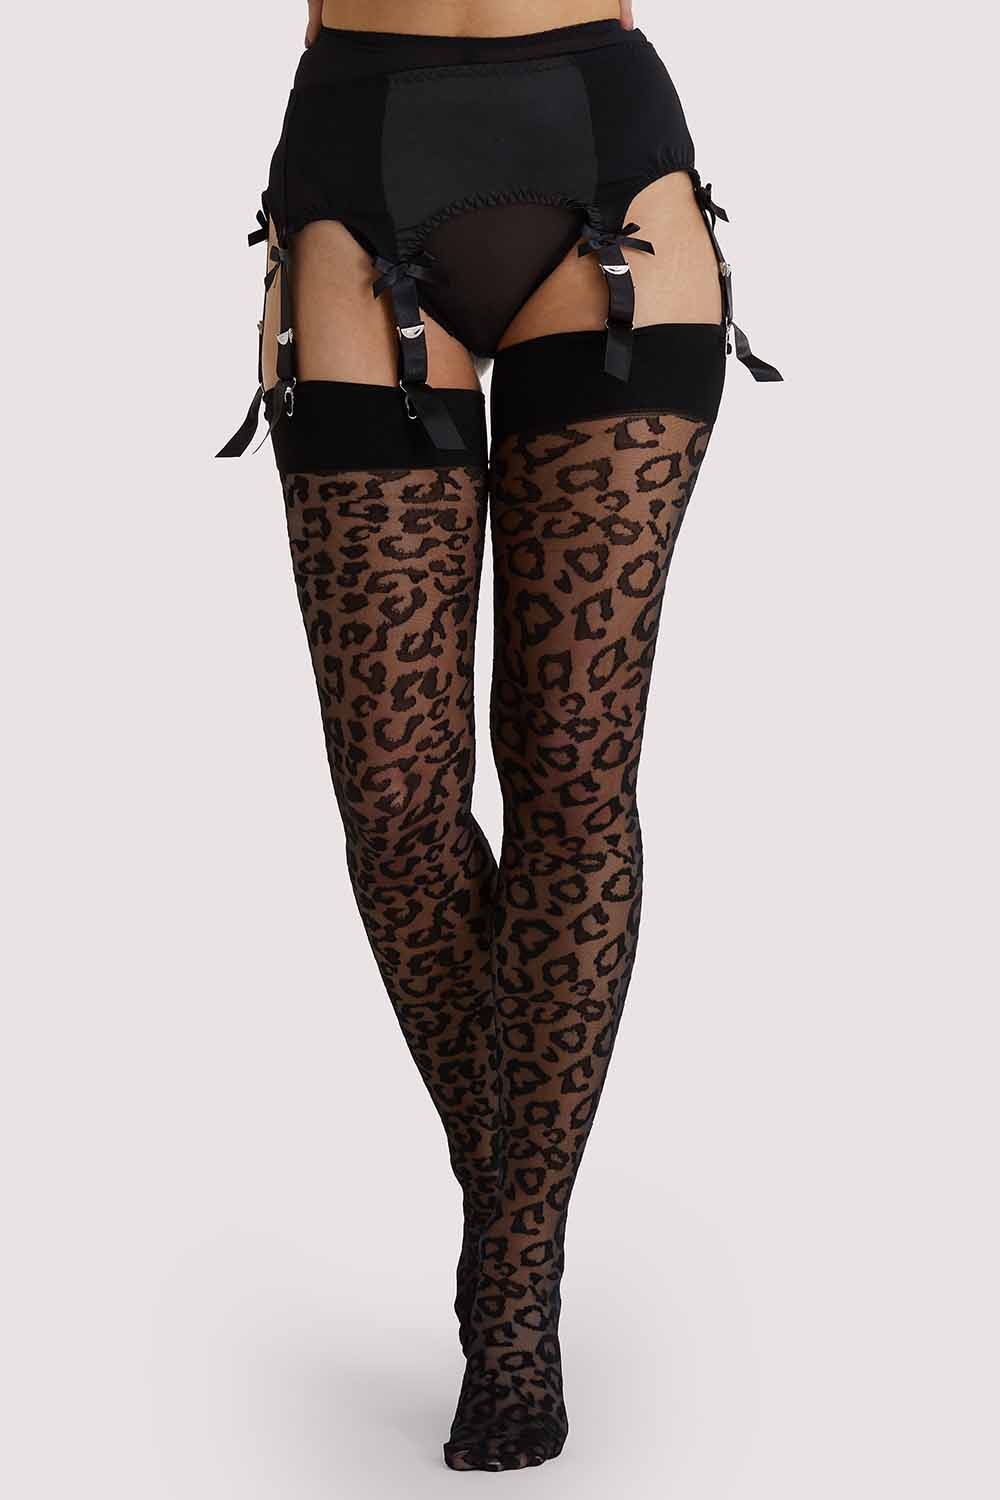 Bettie Page Leopard Knit Stockings - Black/Black AUS 8 - 22